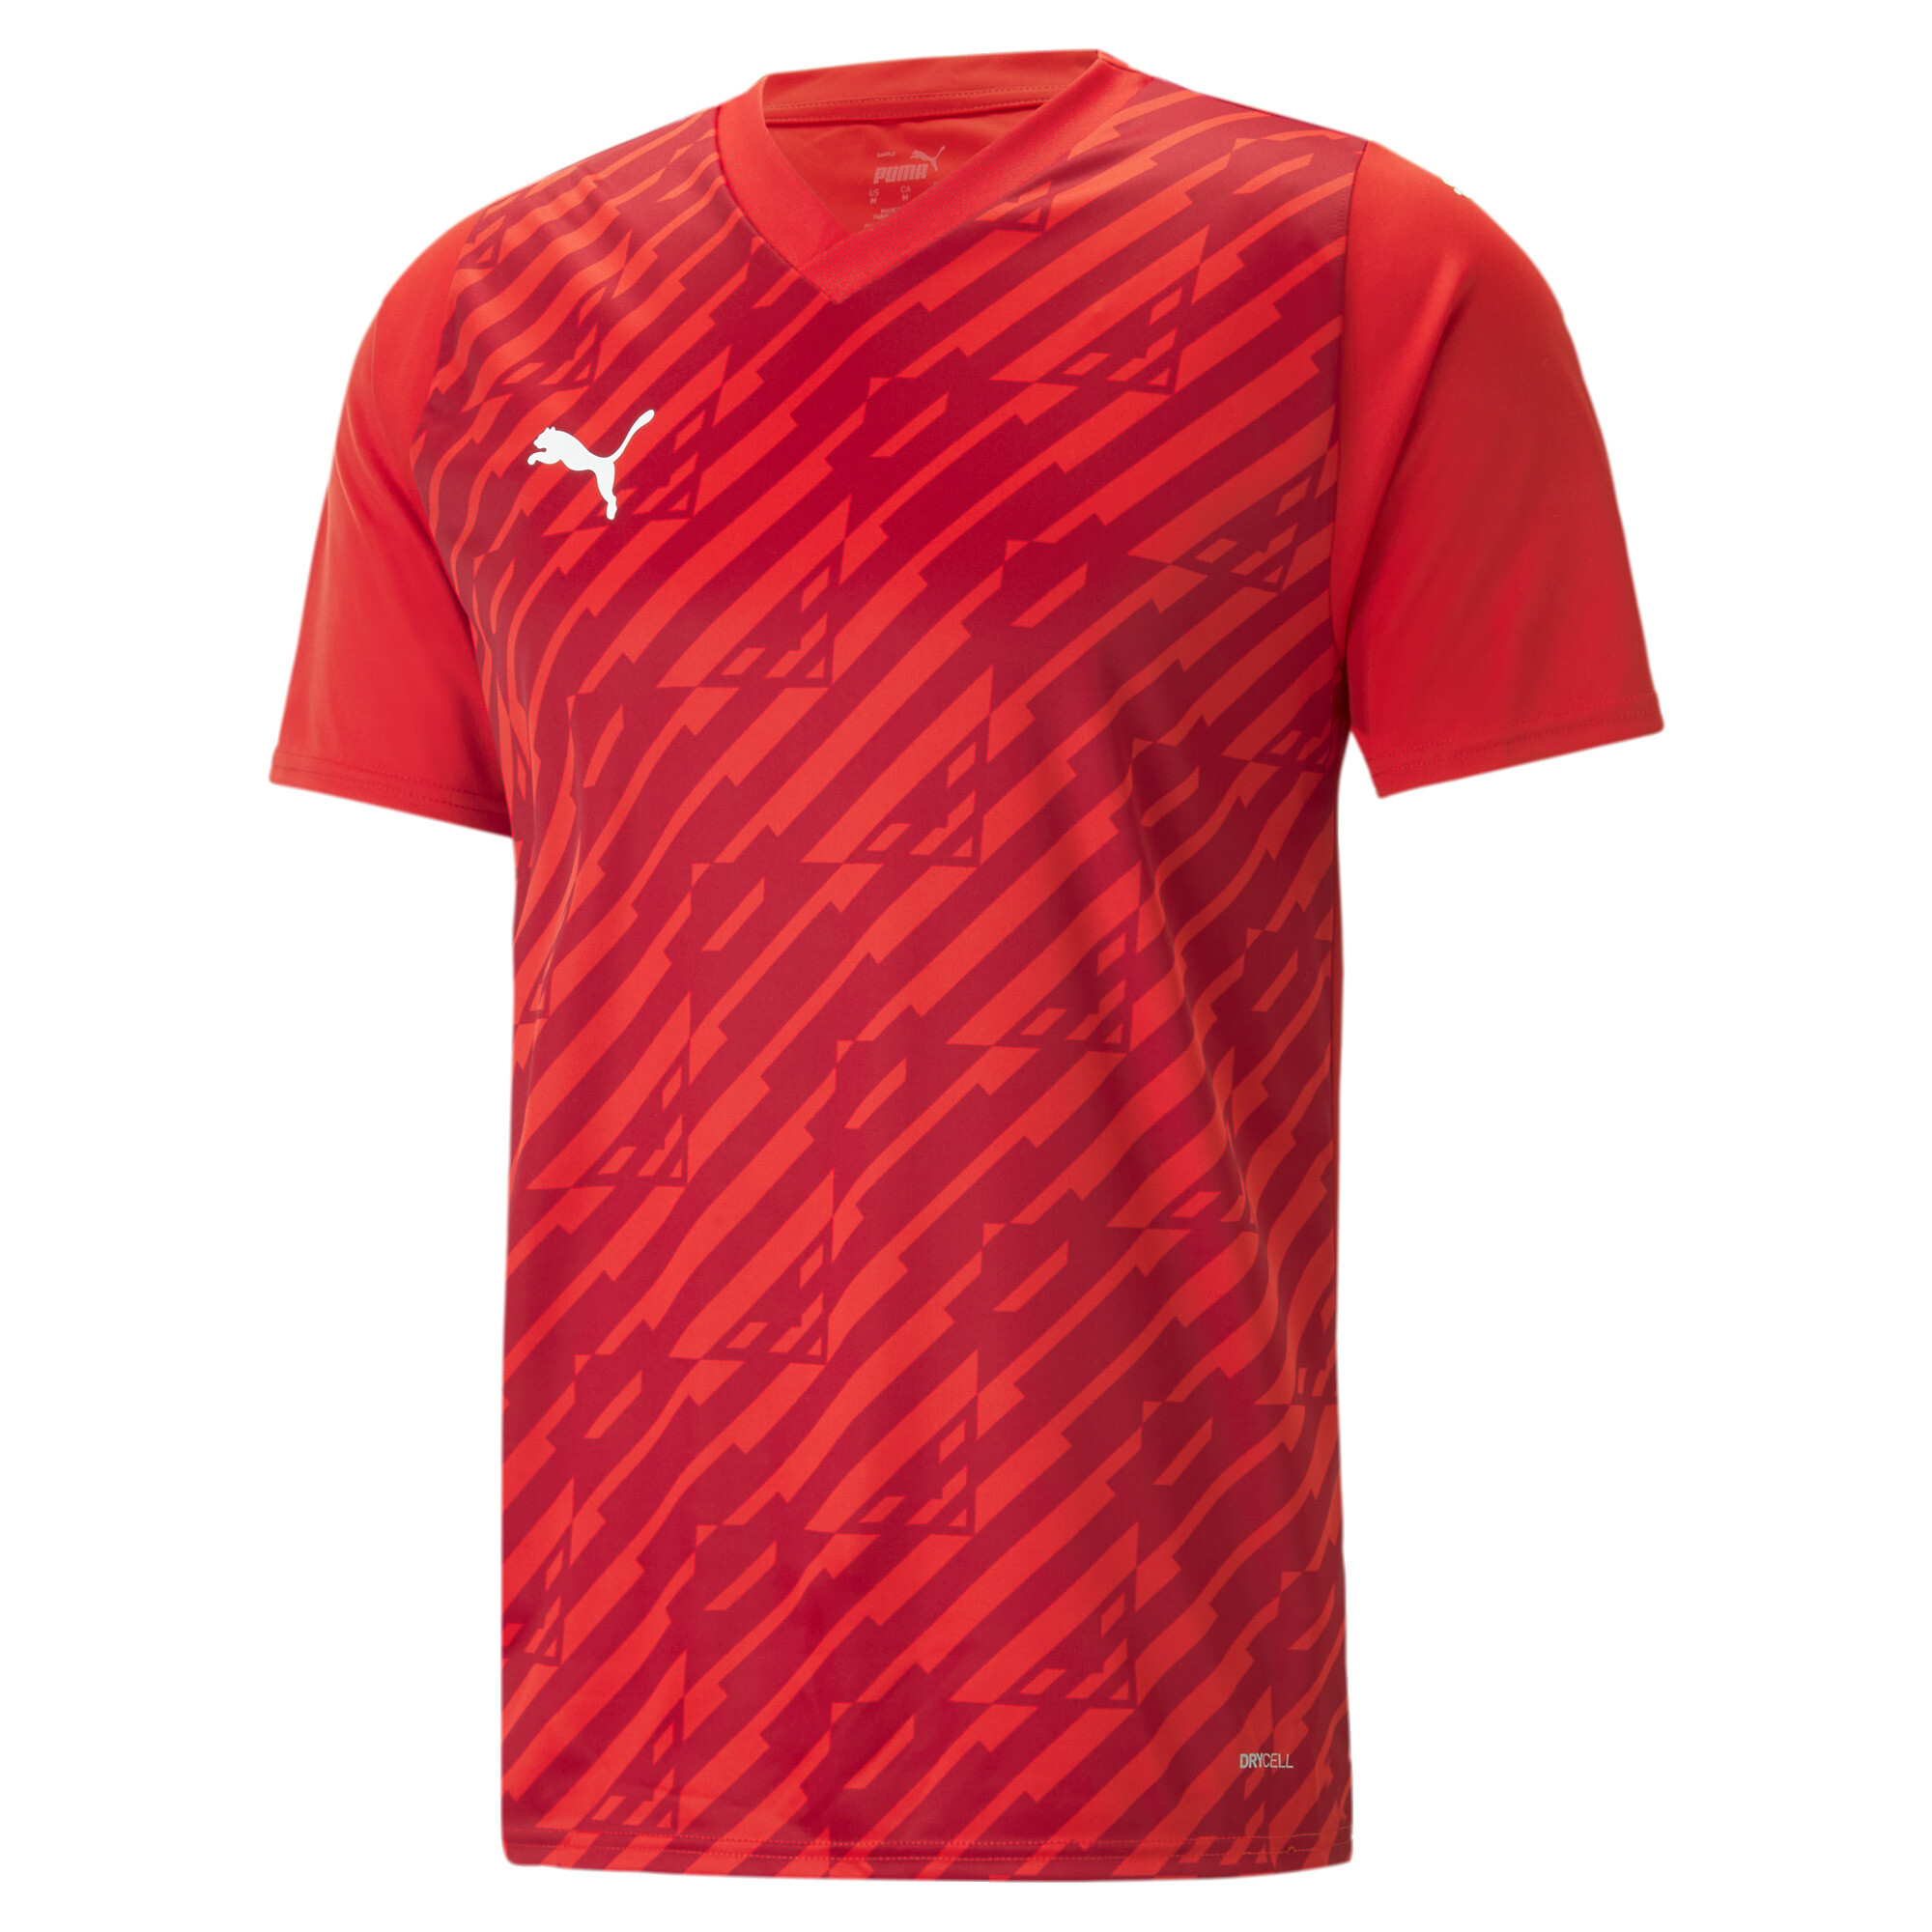 Men's Puma Team ULTIMATE Football Jersey, Red, Size M, Sport